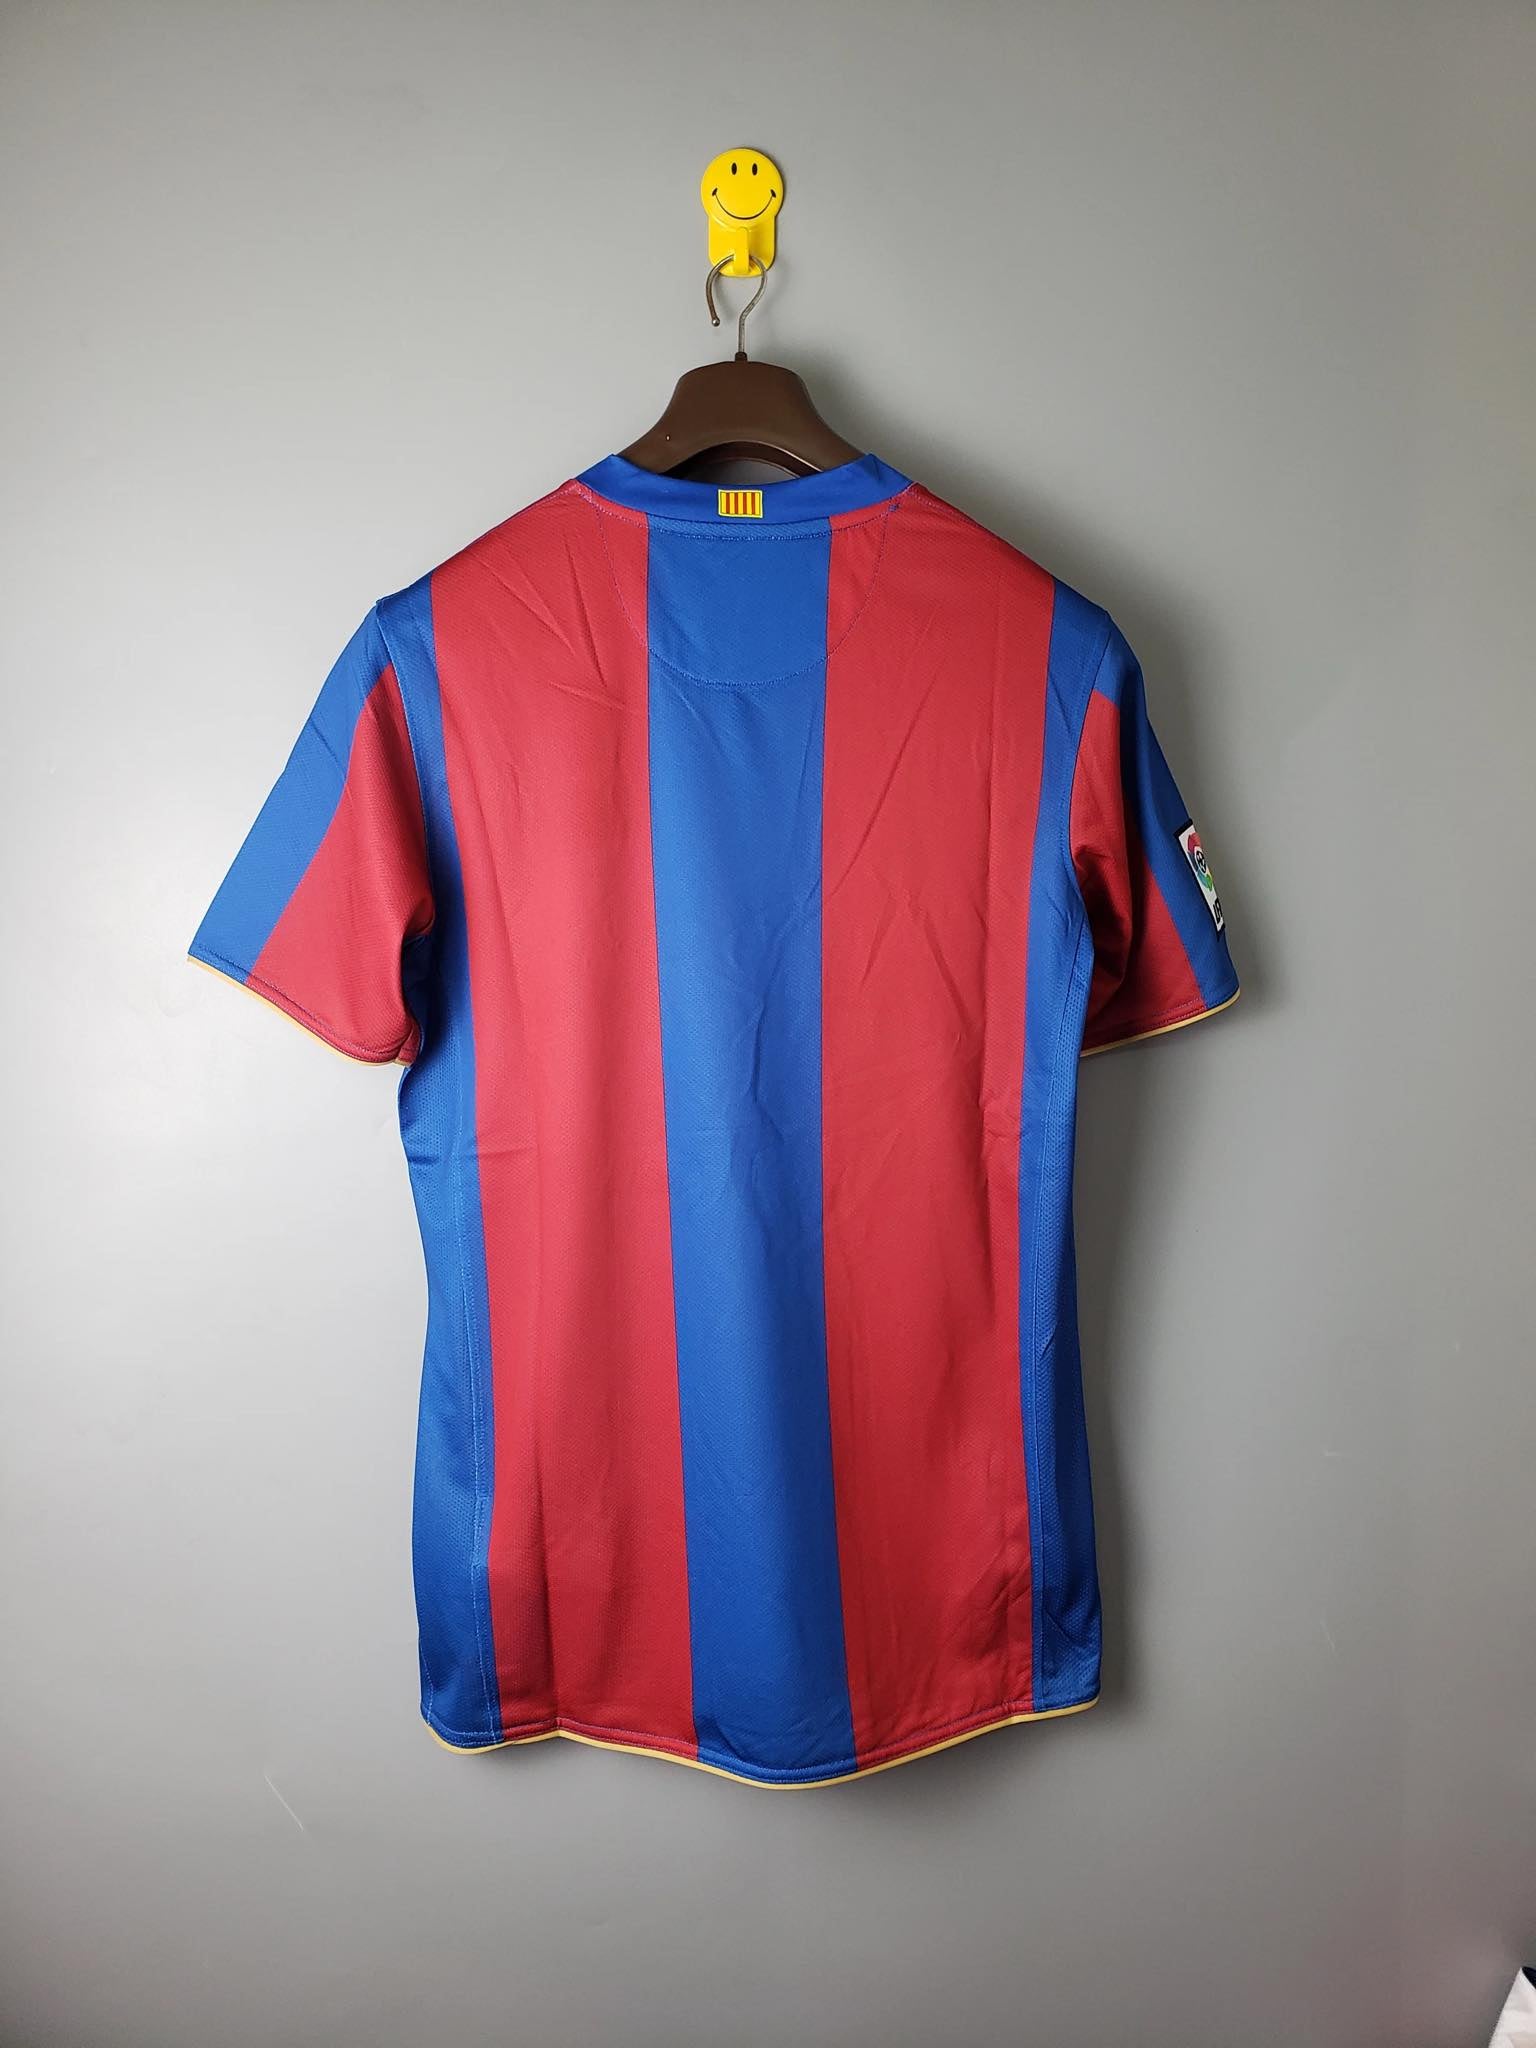 FC Barcelona 2007-08 Home Jersey